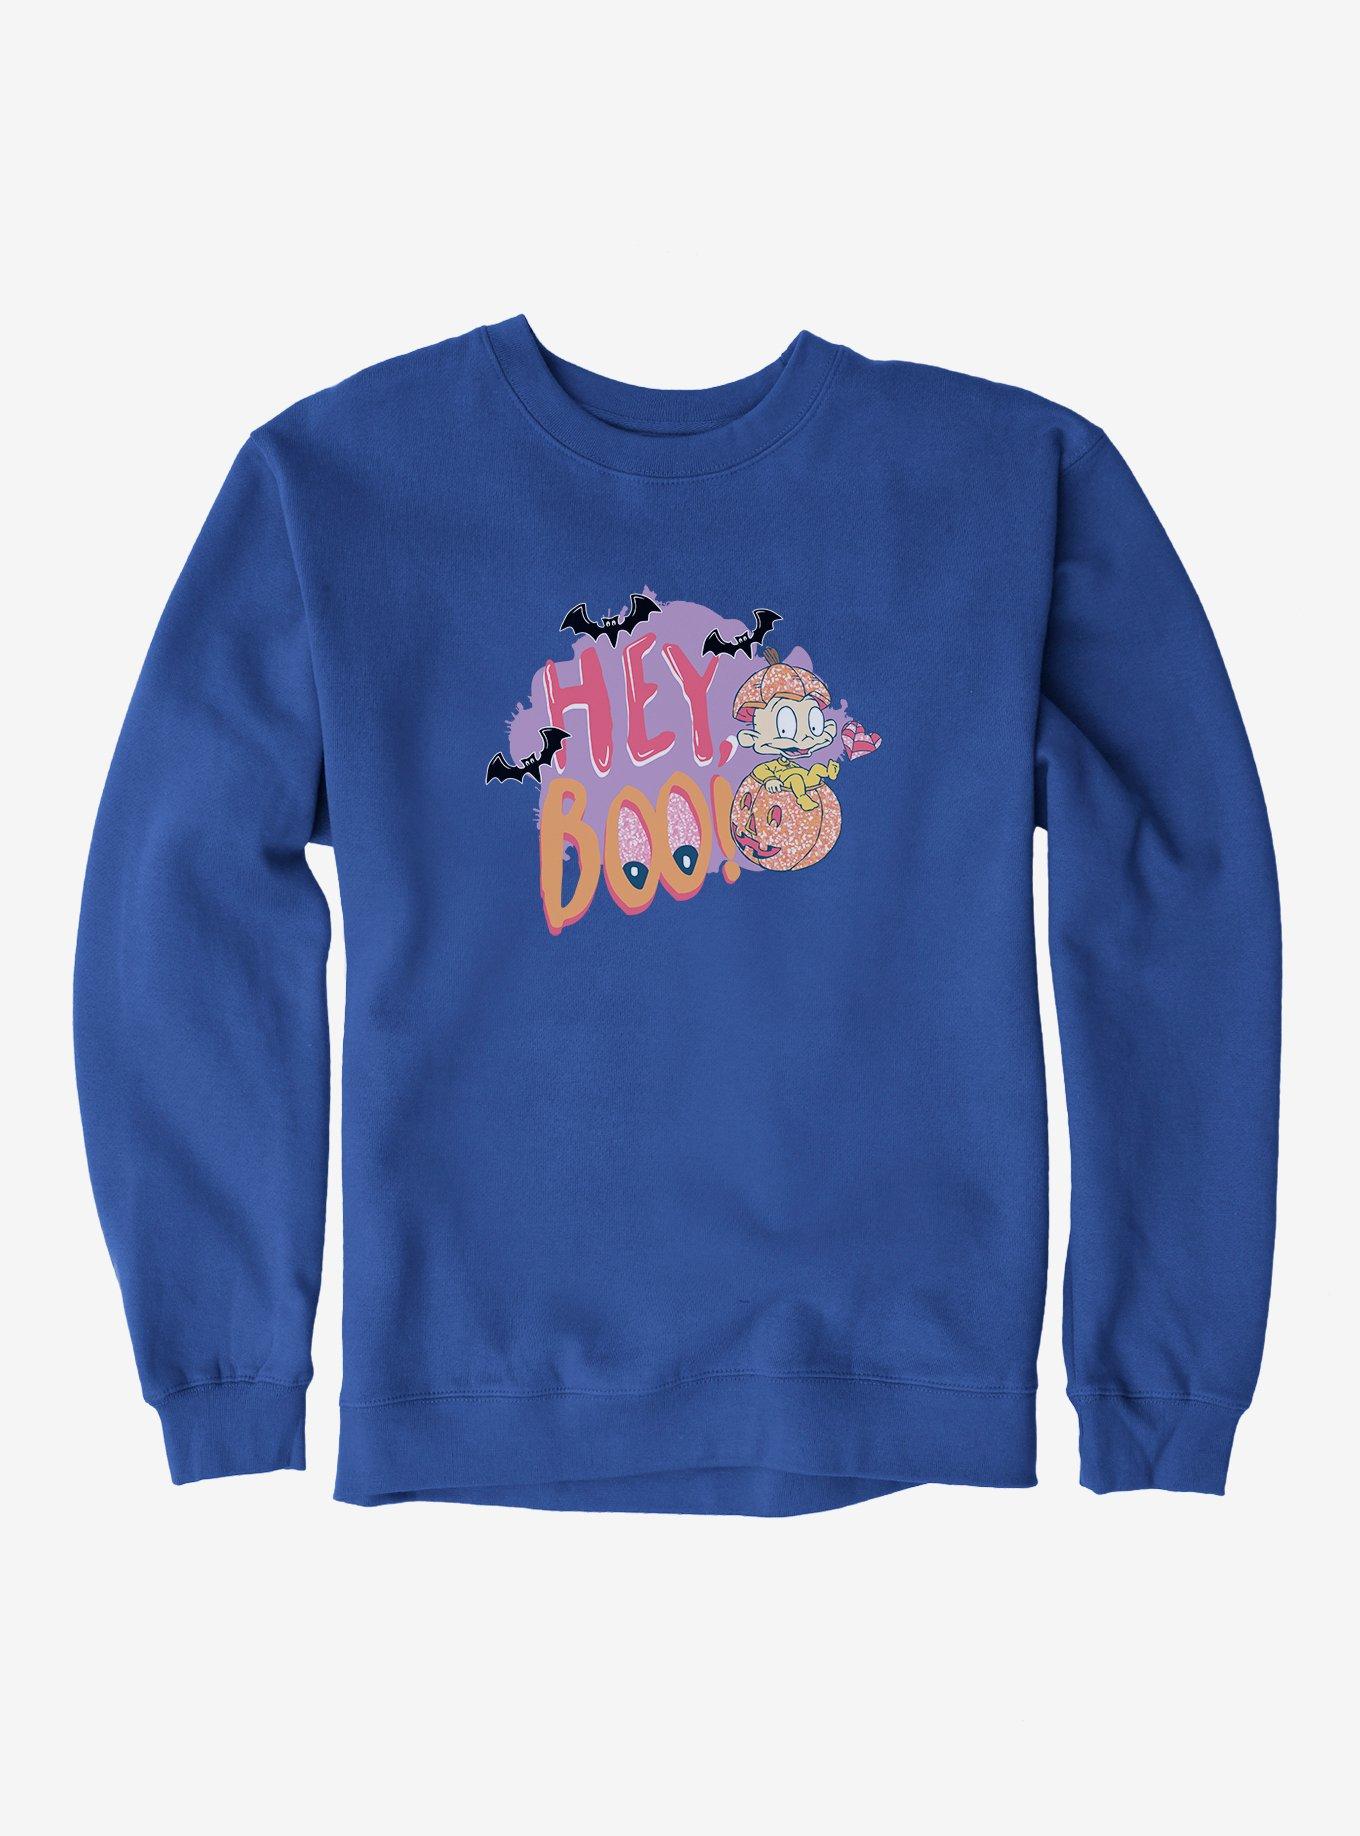 Rugrats Halloween Dil Hey Boo! Pumpkin Sweatshirt, ROYAL BLUE, hi-res